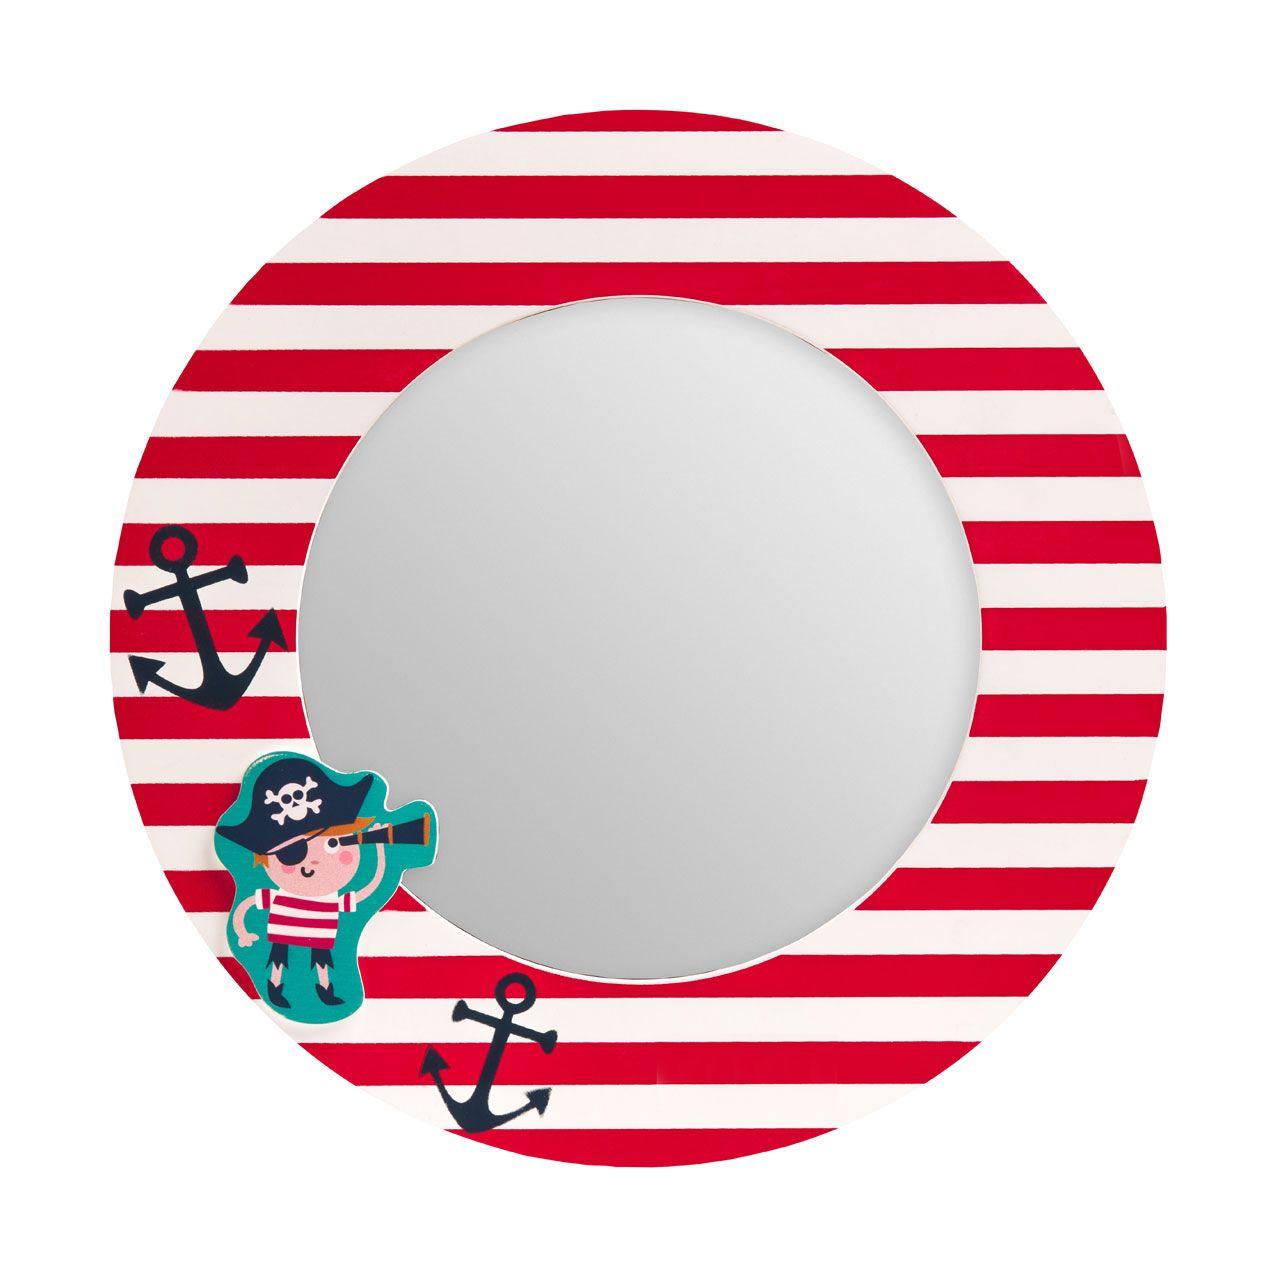 Red and White Round Logo - Premier Pirate Kids Wall Mirror, Red & White Round 30 x 1 x 30cm